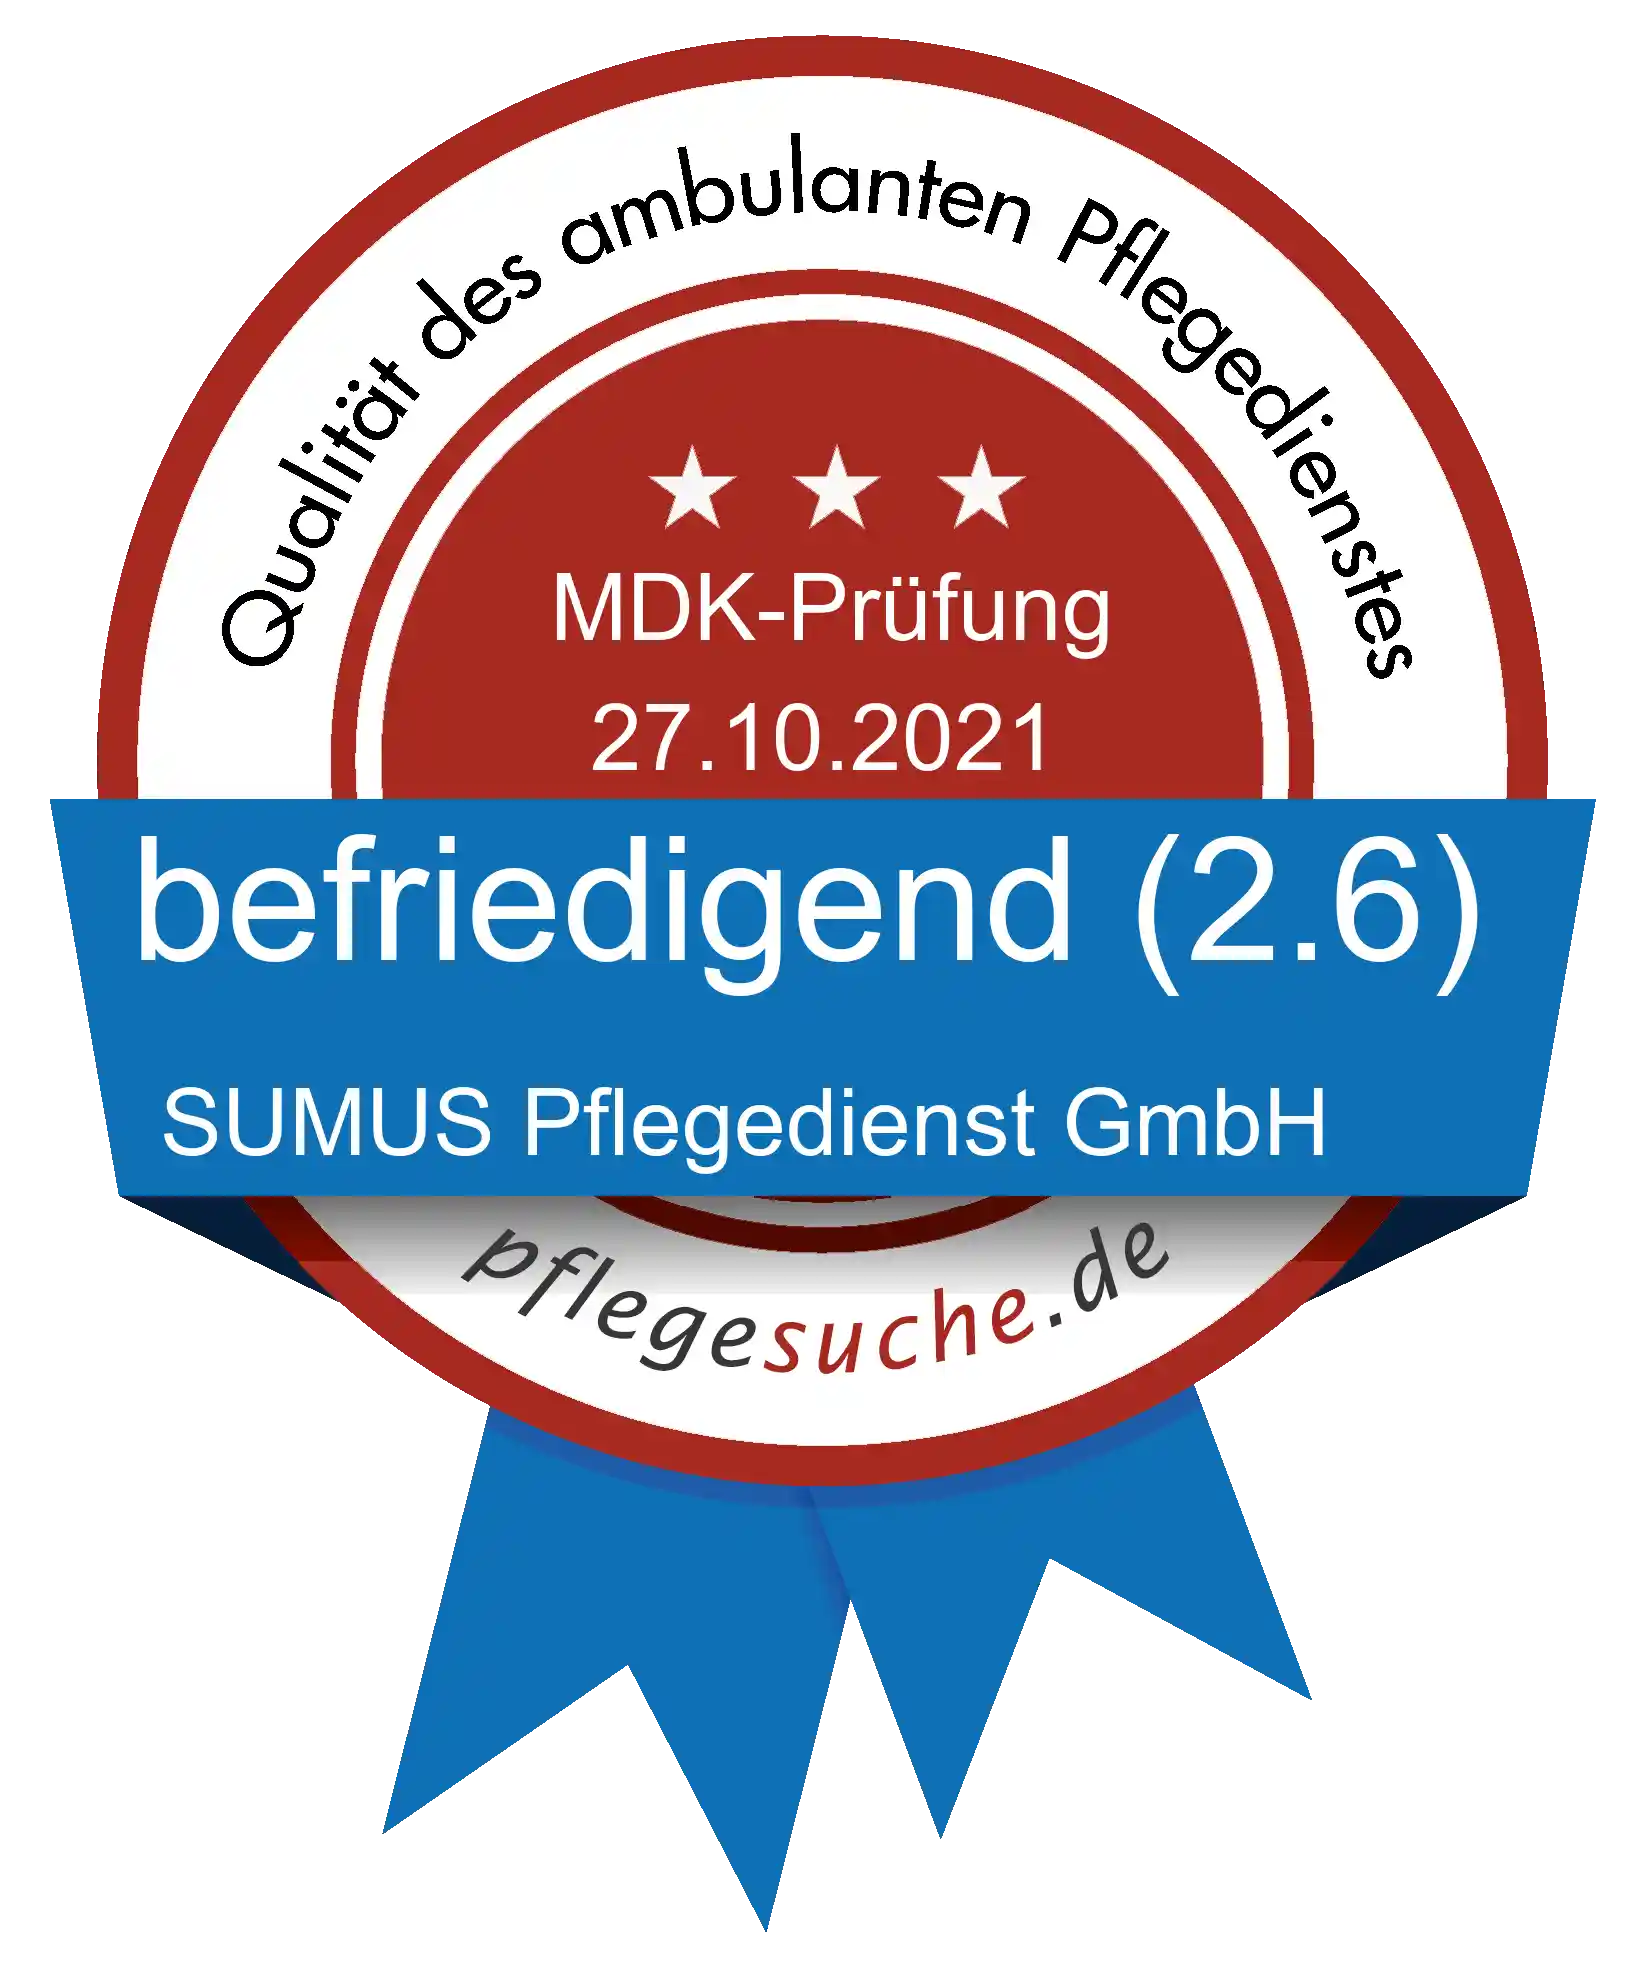 Siegel Benotung: SUMUS Pflegedienst GmbH